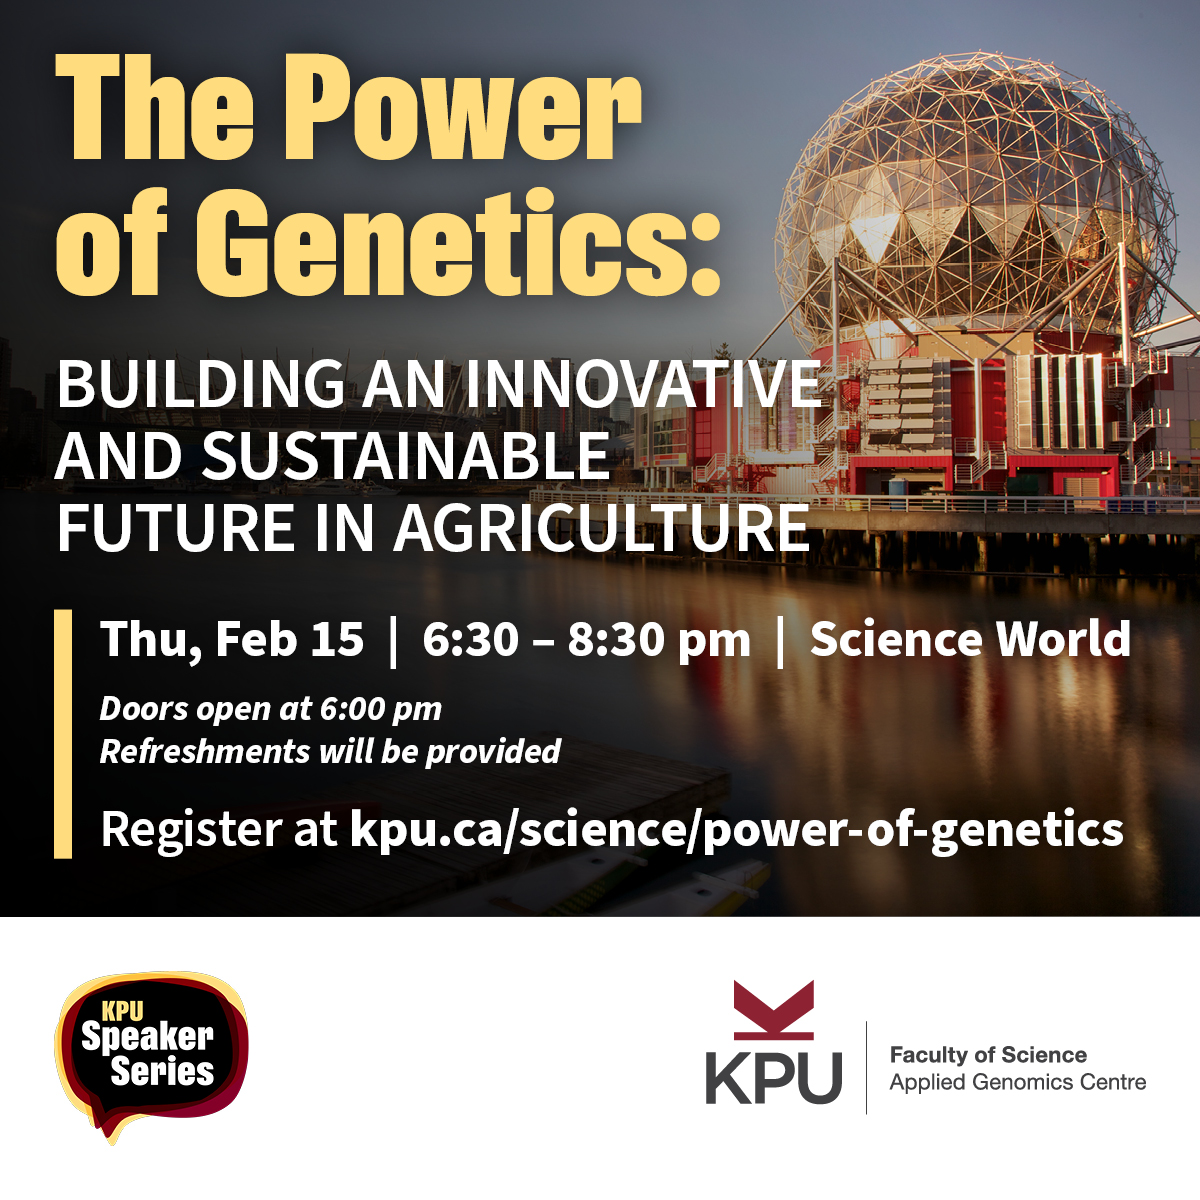 KPU Speaker Series, The Power of Genetics, Dr Paul Adams, KPU Applied Genomics Centre, Science World